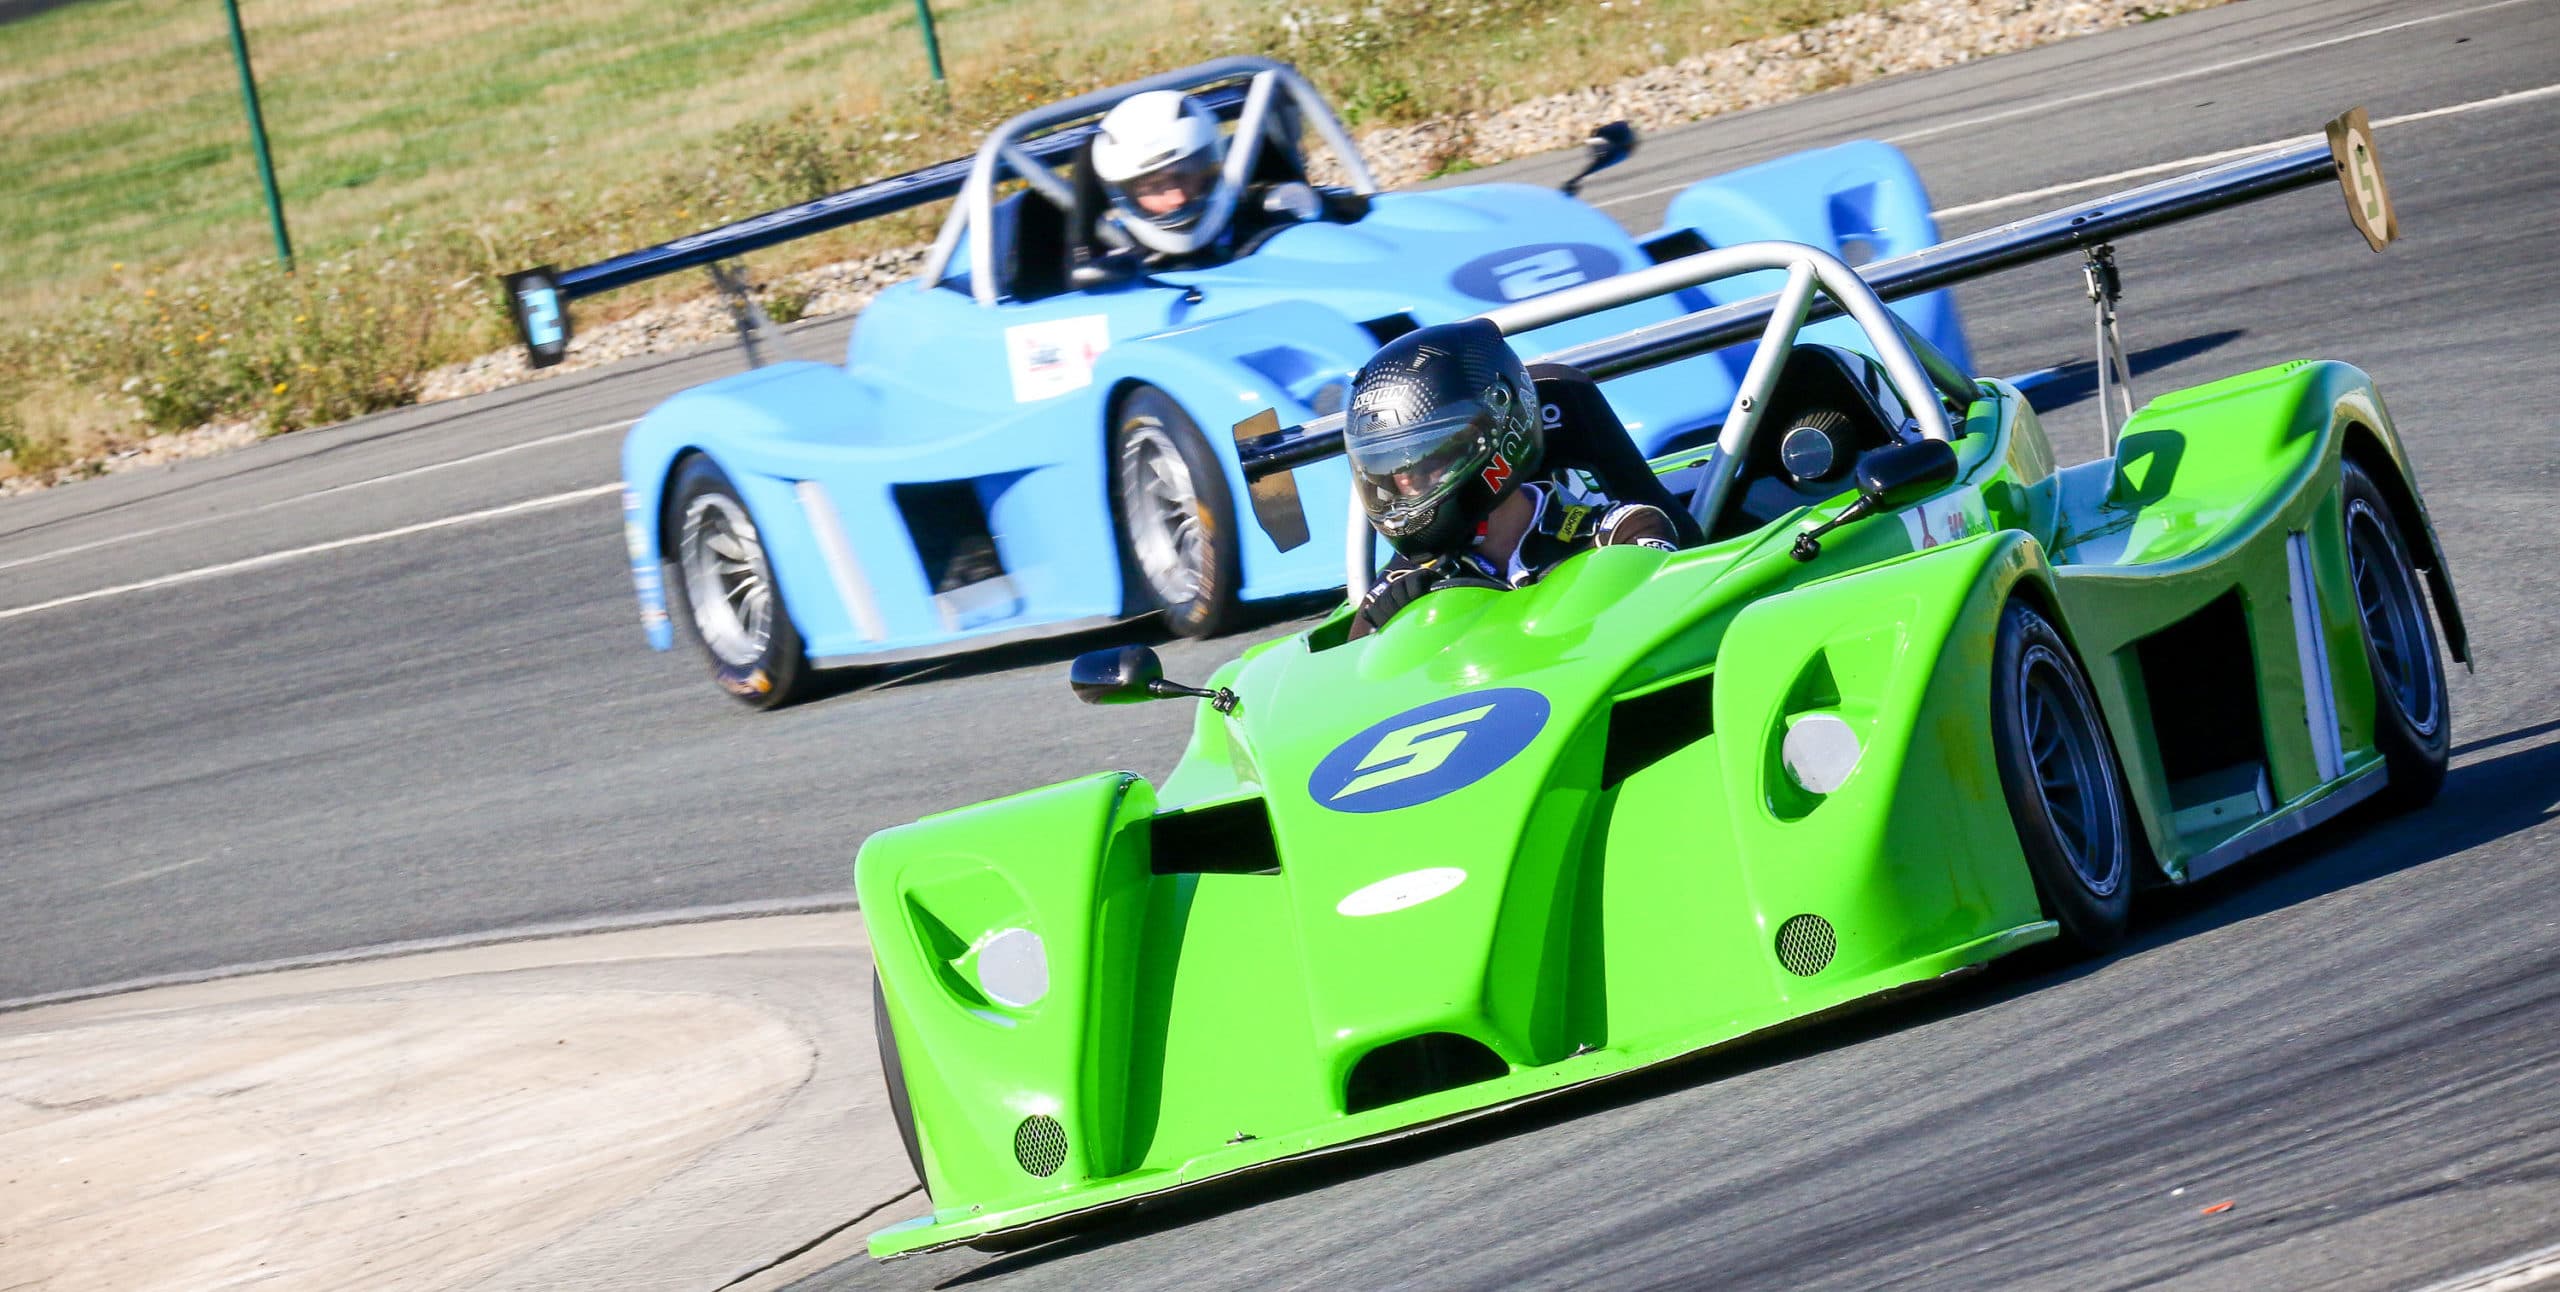 Circuit Car Concept, Pilotage fun & fast